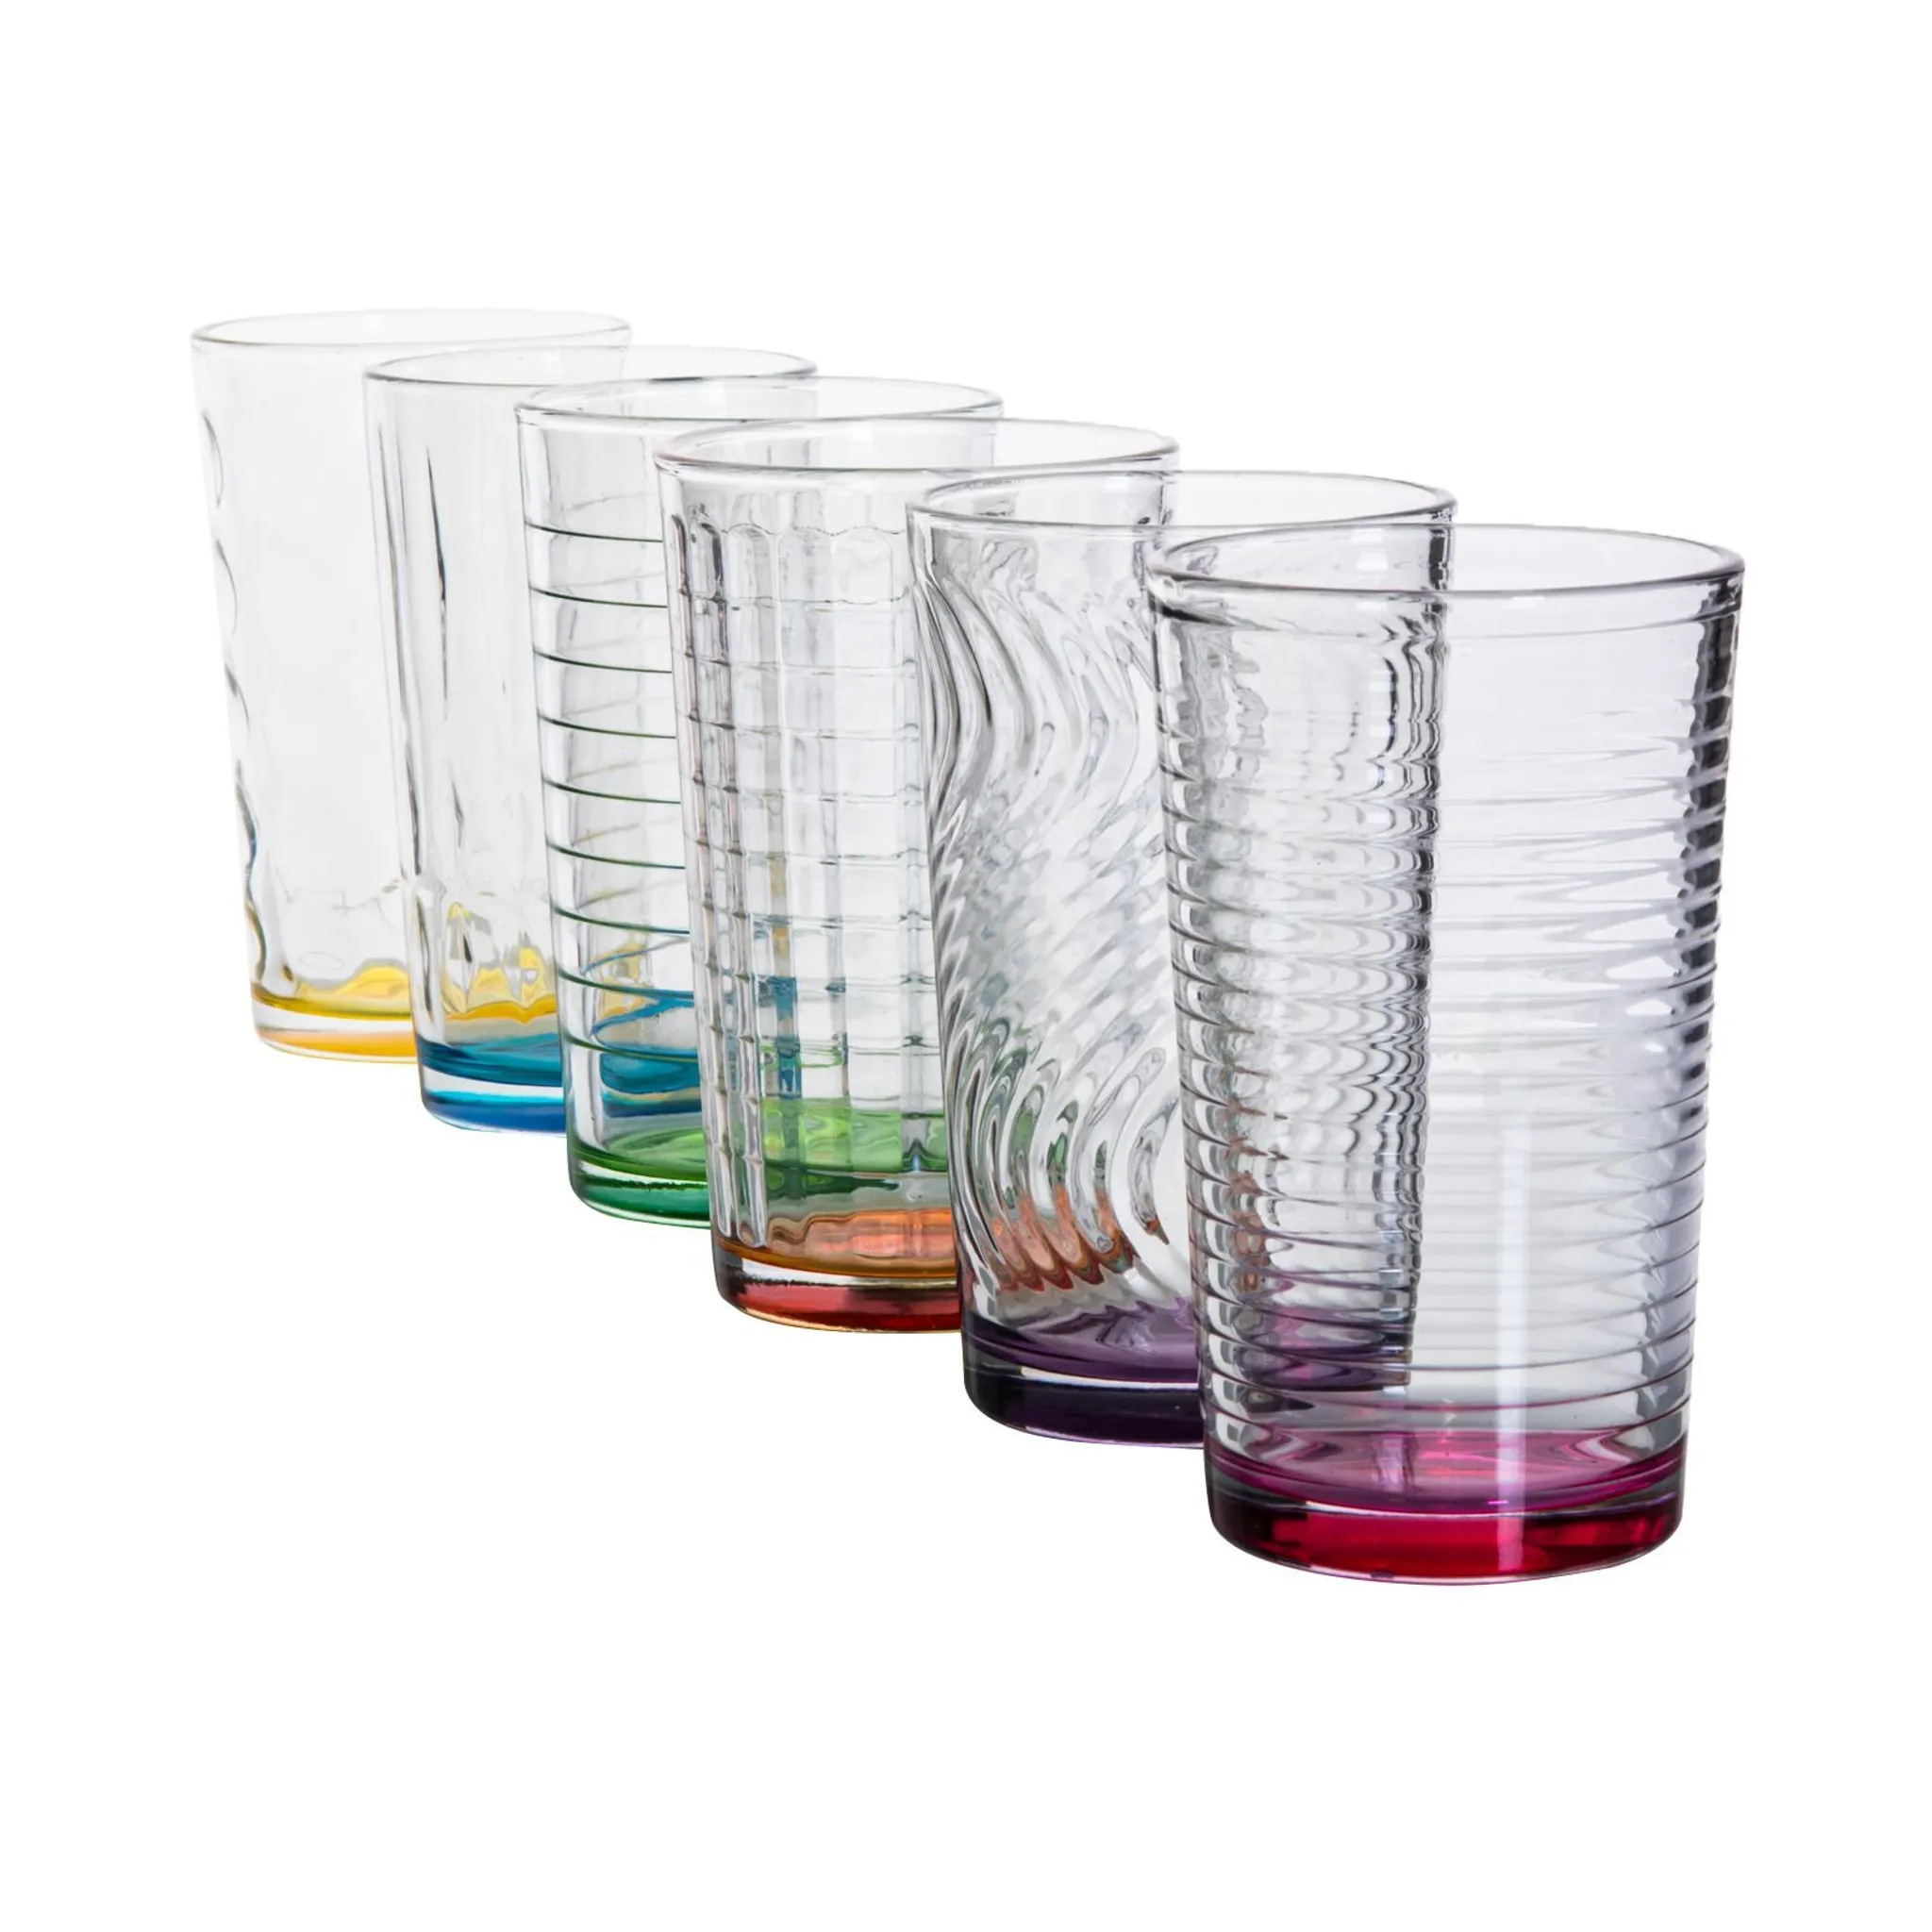 Zeaicos Glas Trink-Gläser Wasser-Gläser Glas-Becher Saft-Gläser 400 ml, Glas